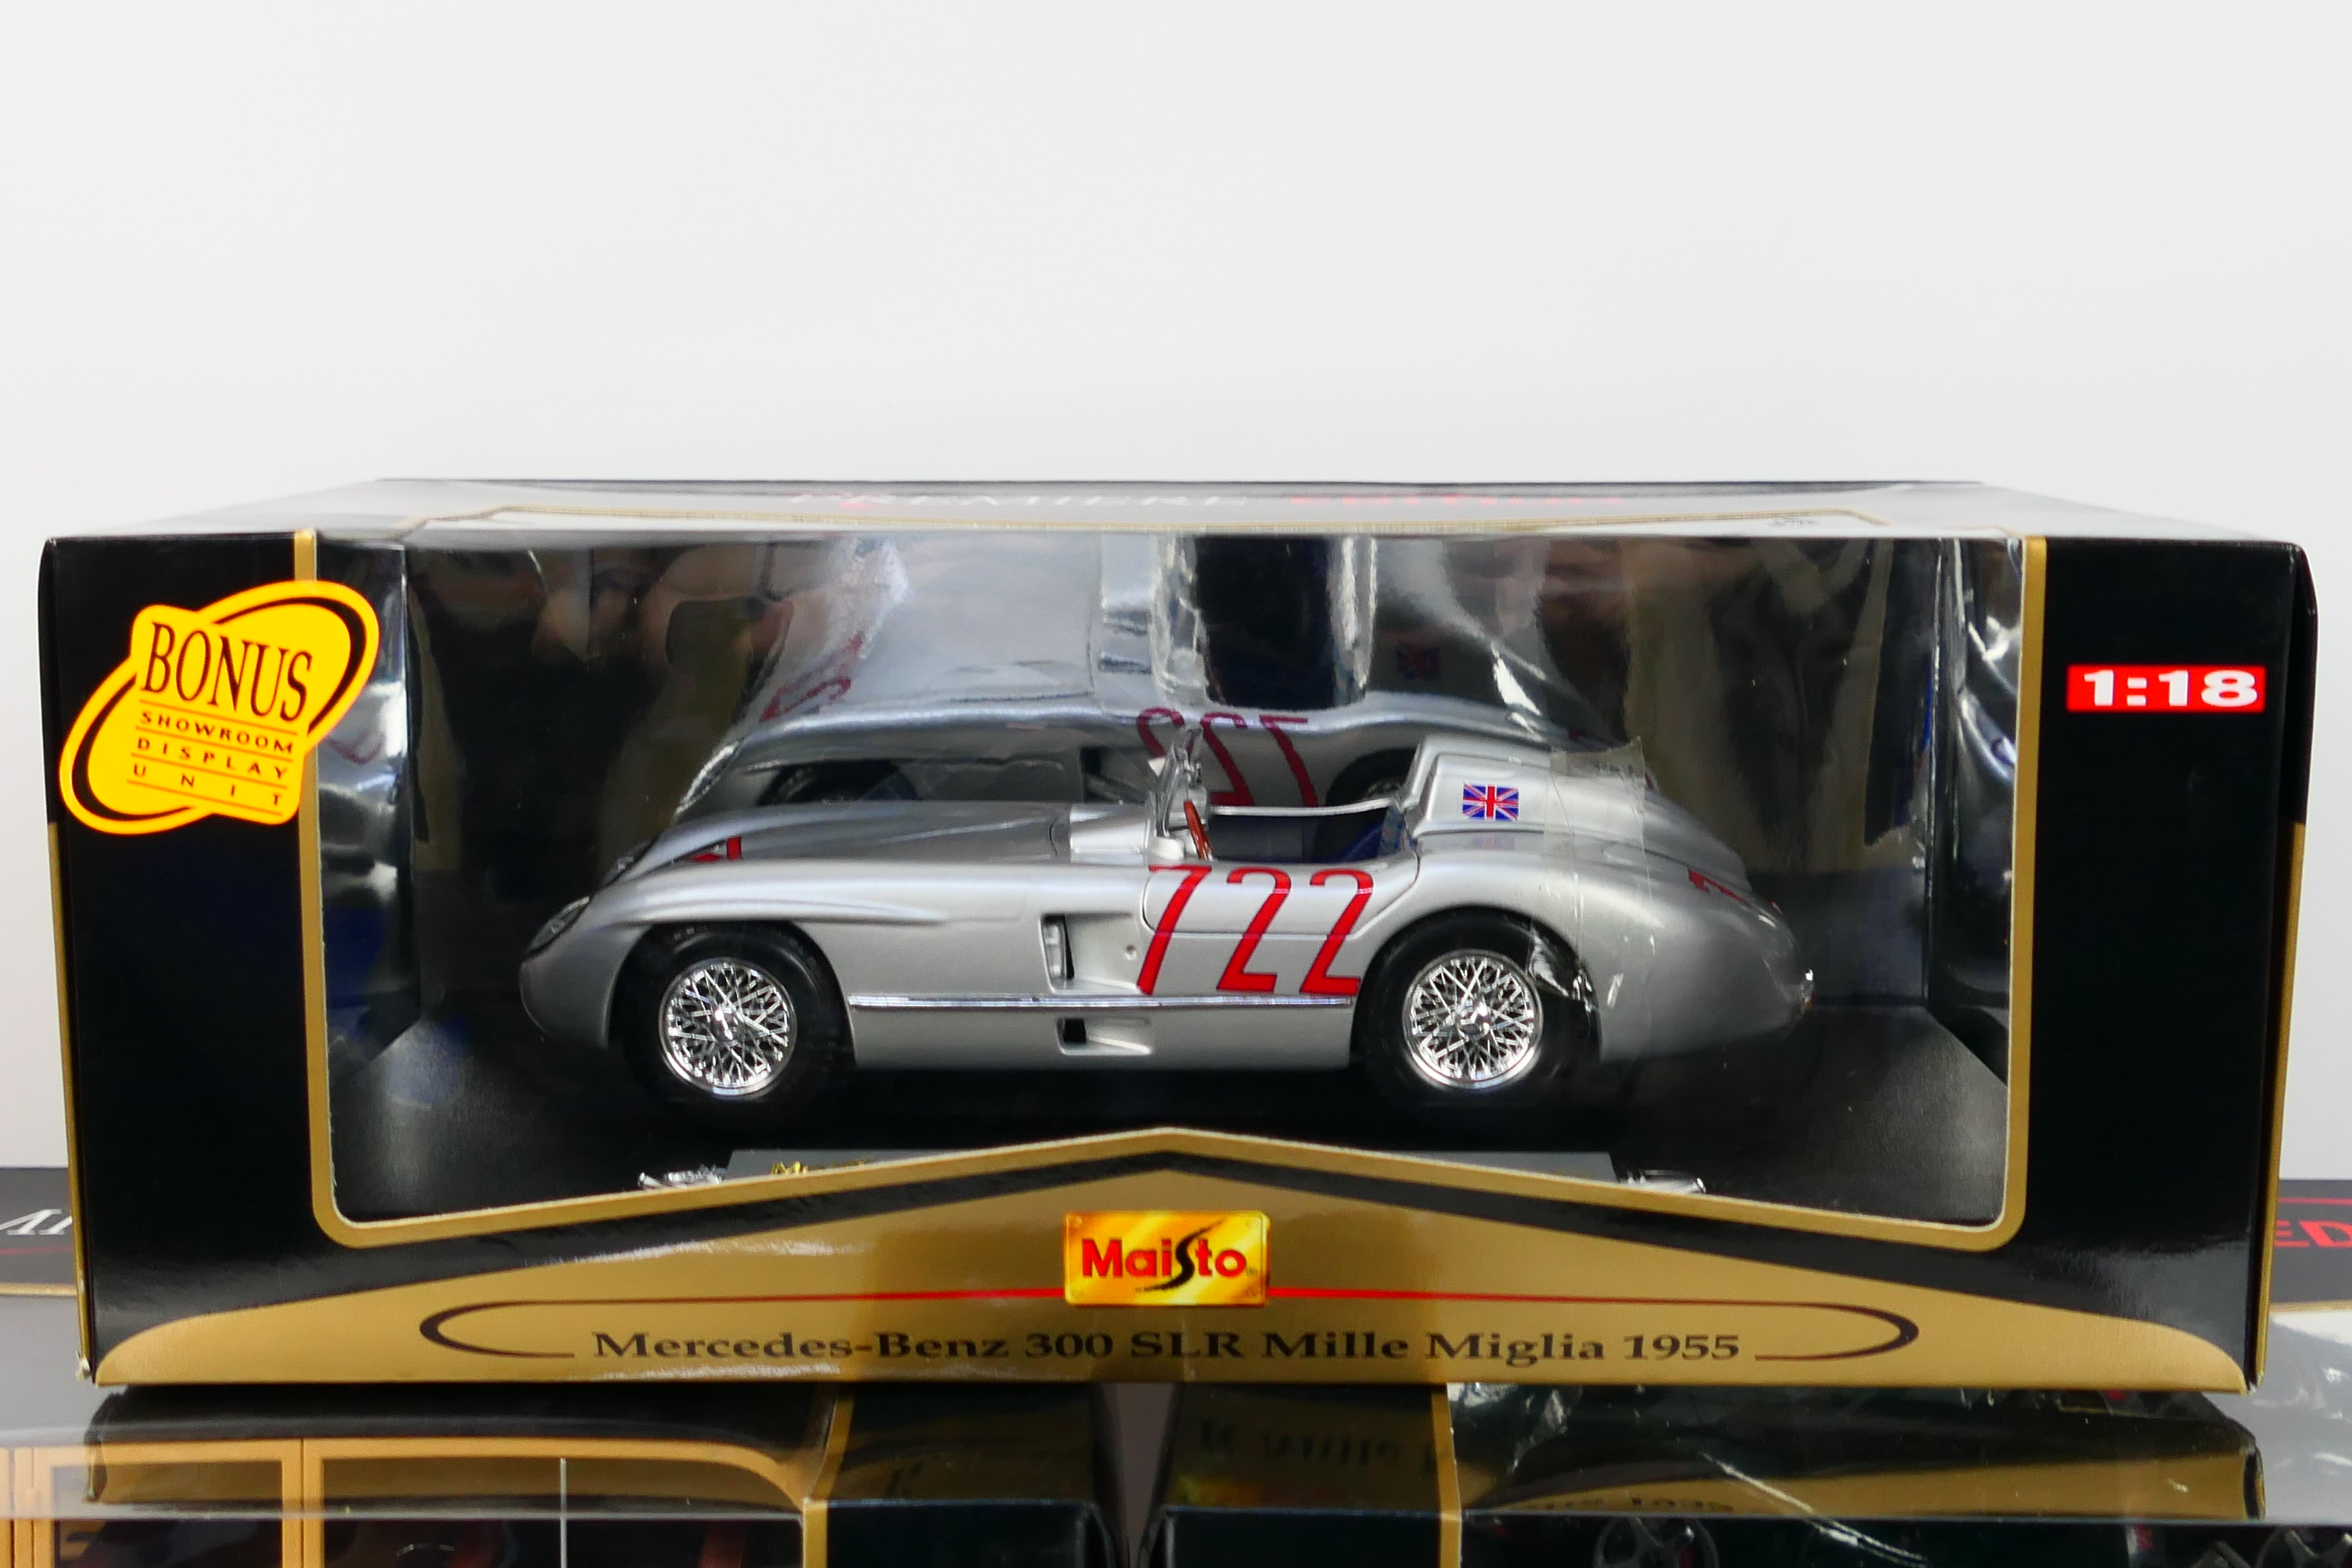 Maisto - Three boxed Maisto 'Premiere Edition' 1:18 scale diecast model cars. - Image 2 of 4